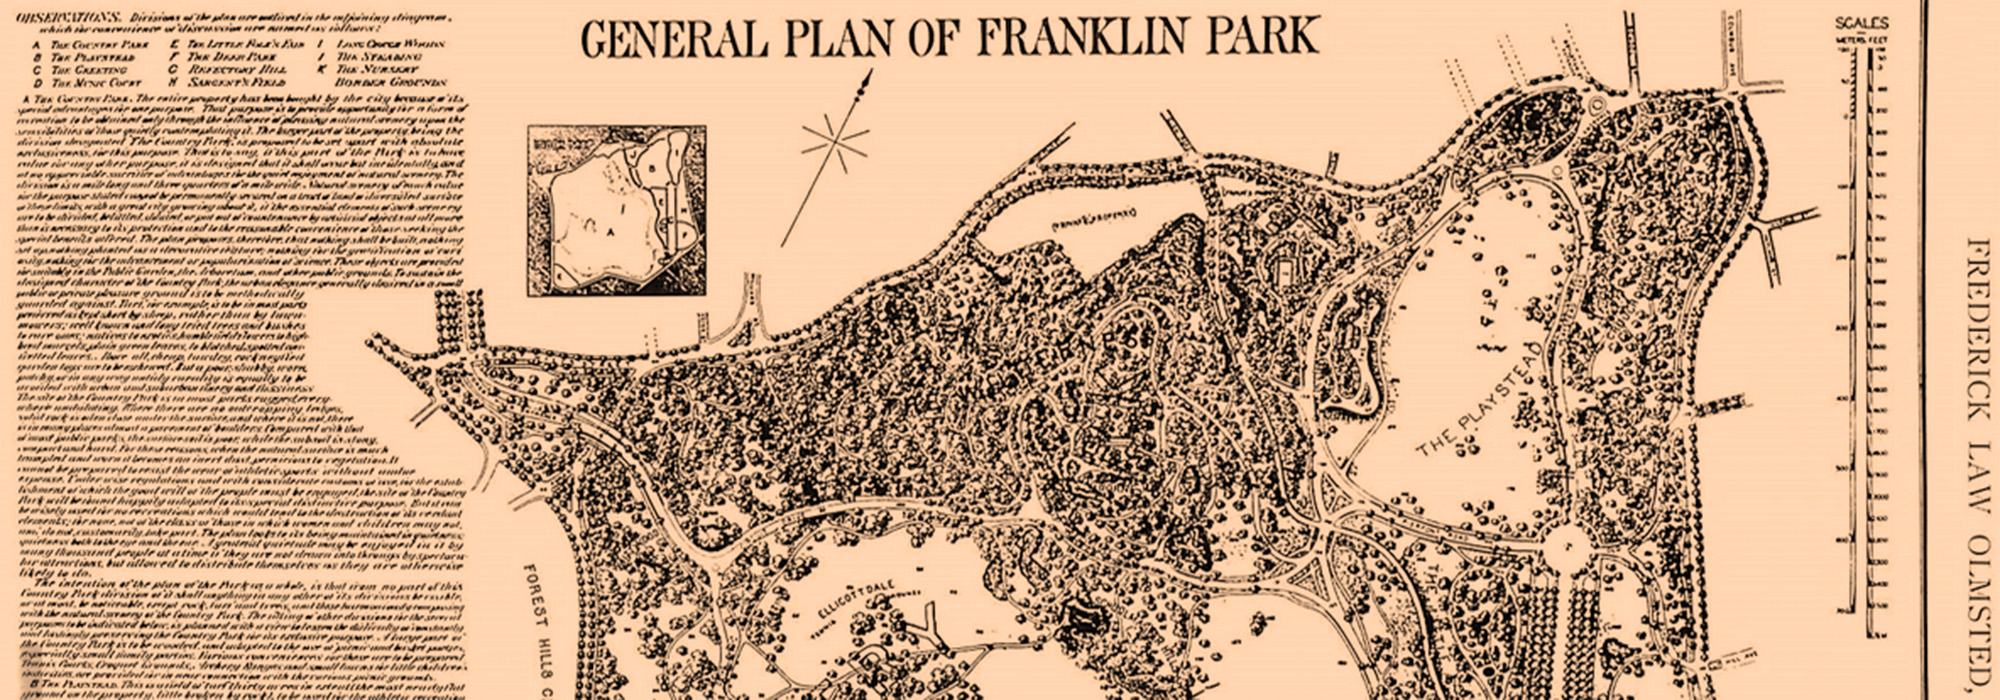 MA_Boston_FranklinPark-Plan_byP.H.Elwood_1924_Hero.jpg